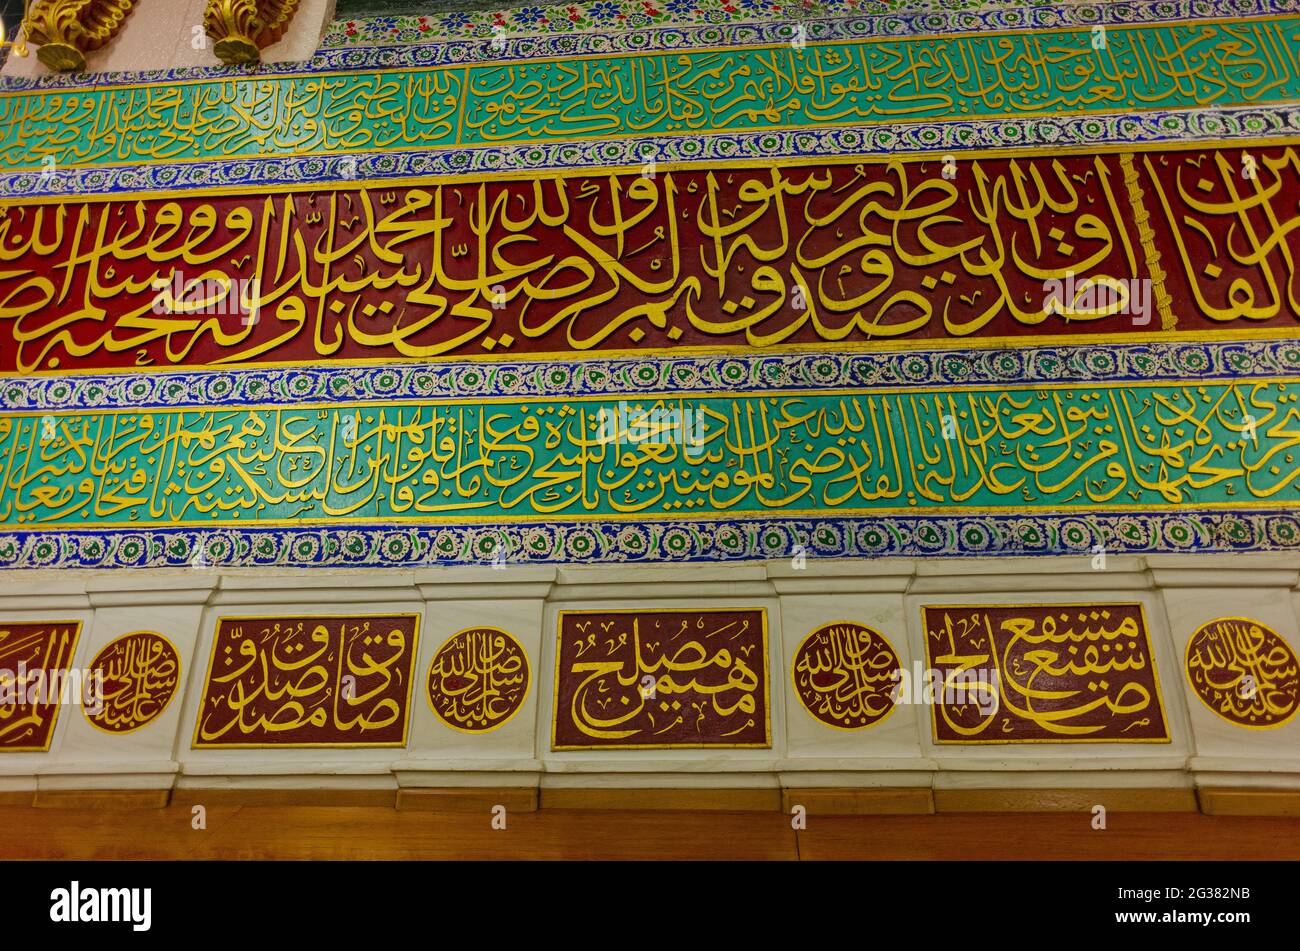 Medina, Saudi Arabia - Prophet Mohammed Mosque, Arabic Calligraphy Inscriptions and Islamic art ornament - Inside Al Masjid an Nabawi Stock Photo